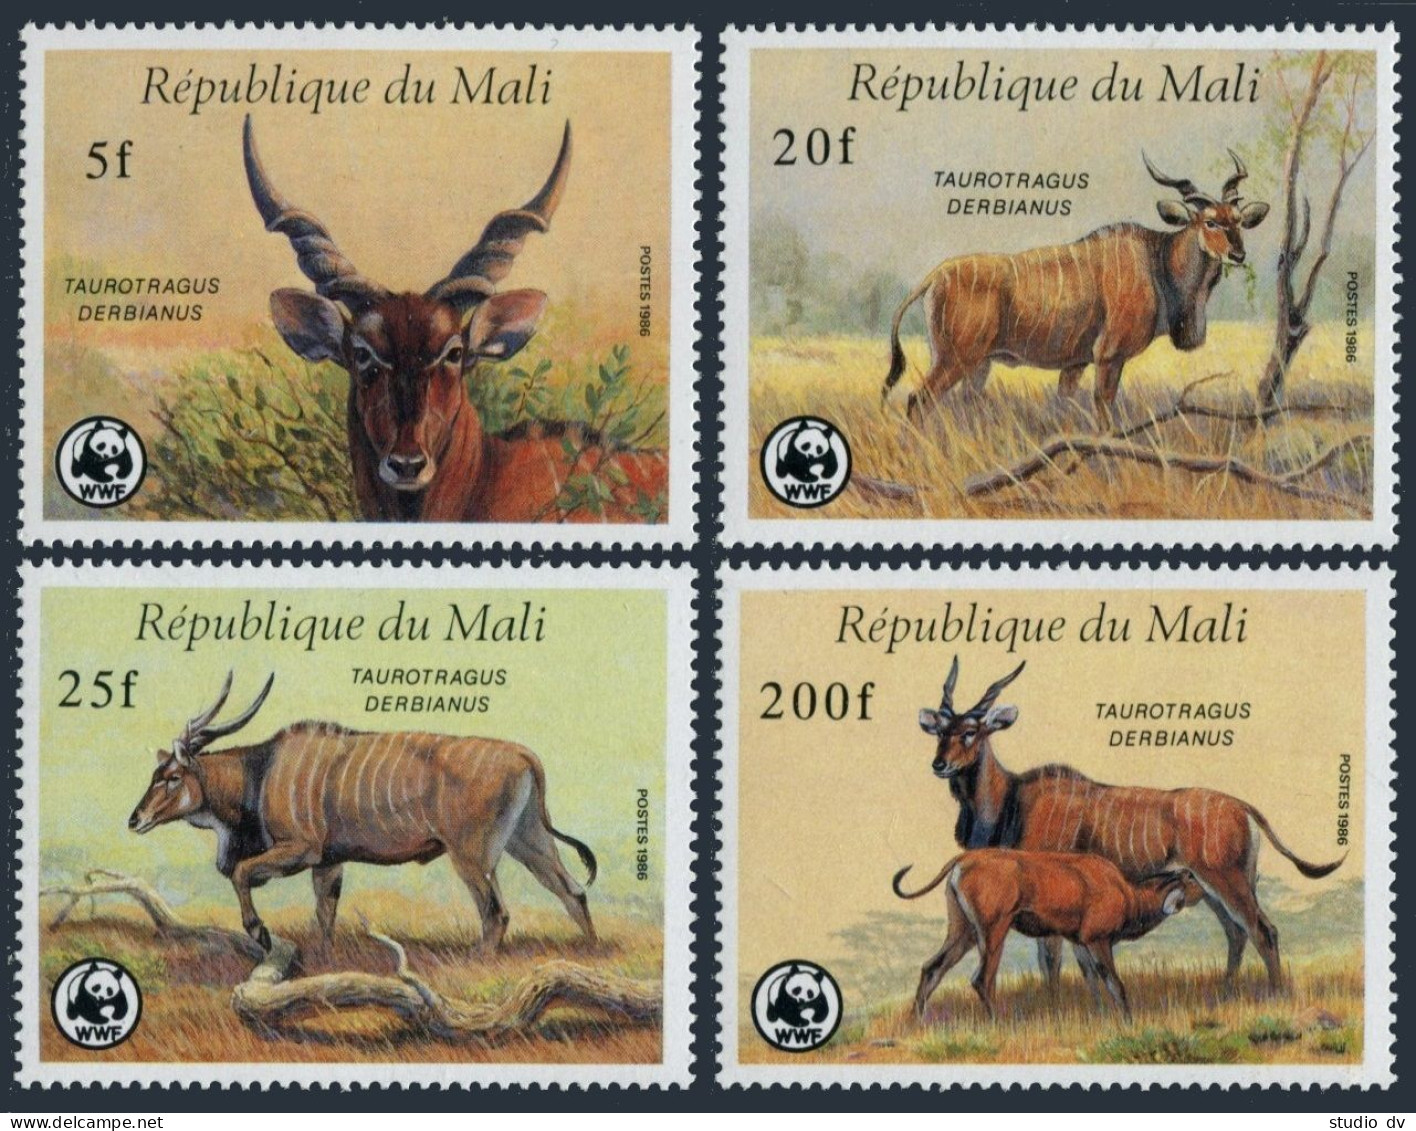 Mali 542-545, MNH. Mi 1078-1081. World Wildlife Fund WWF-1986. Derby's Eland. - Mali (1959-...)